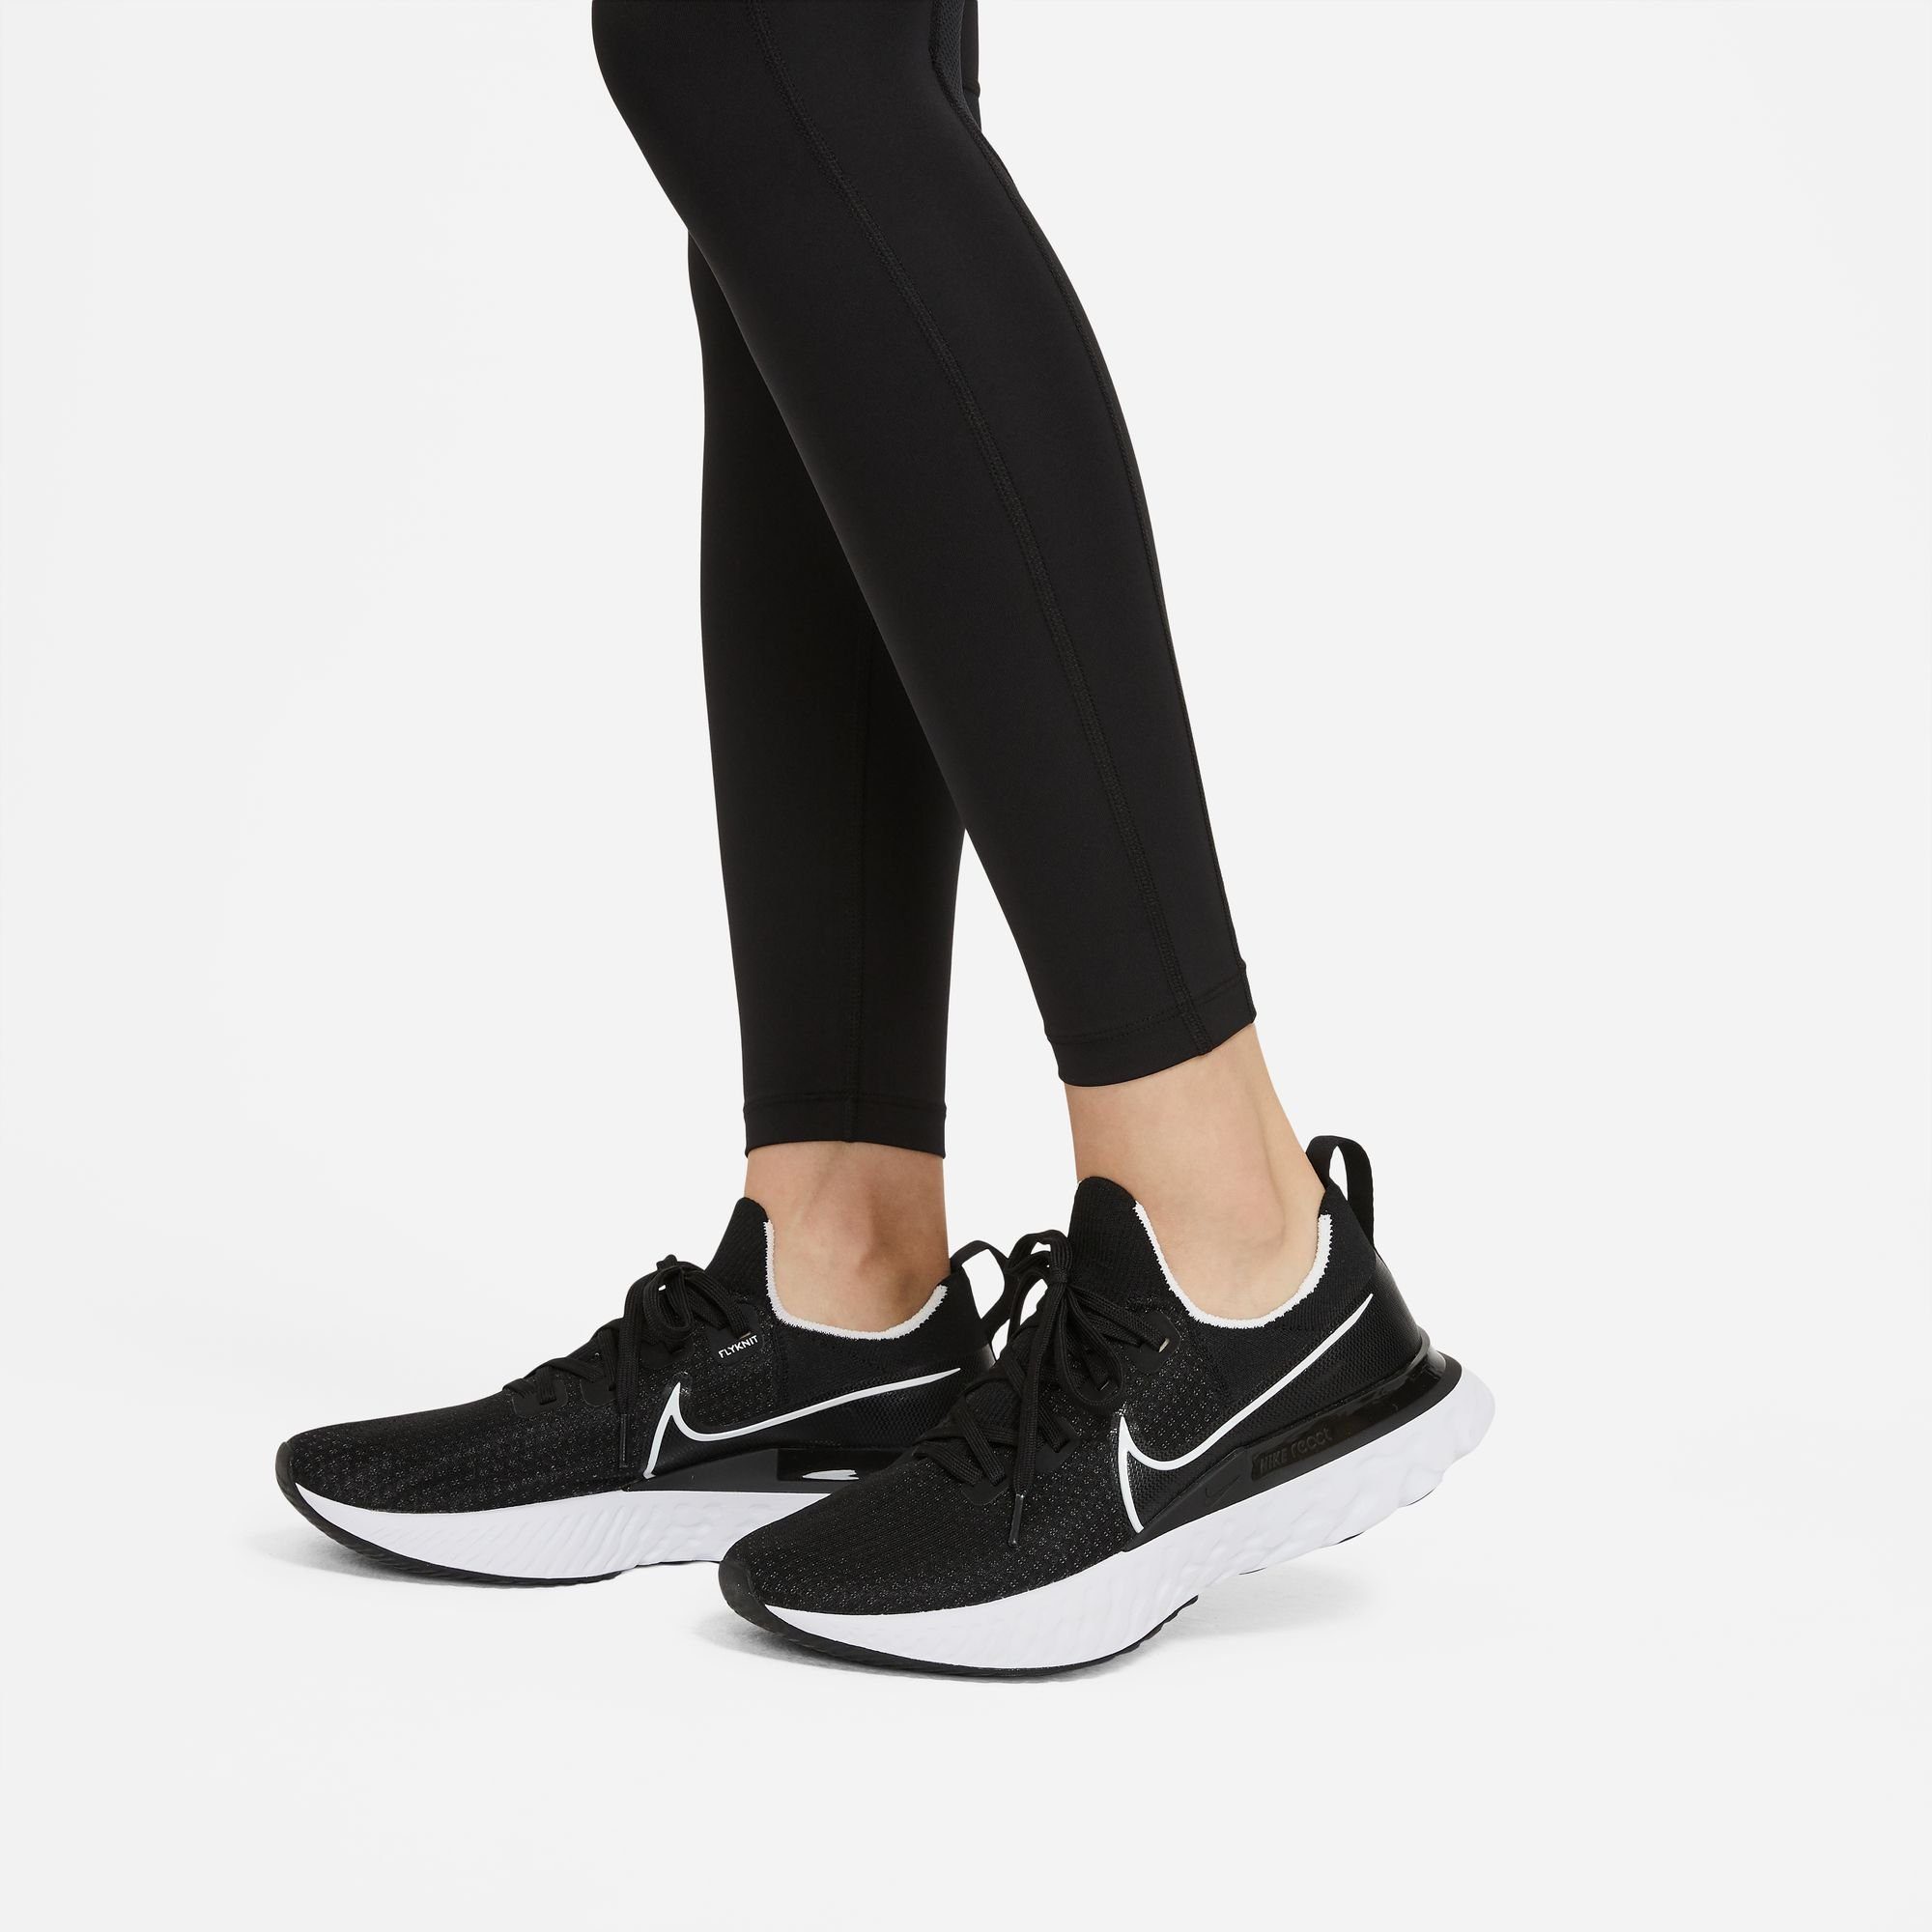 Nike Lauftights EPIC FAST schwarz RUNNING LEGGINGS MID-RISE WOMEN'S POCKET